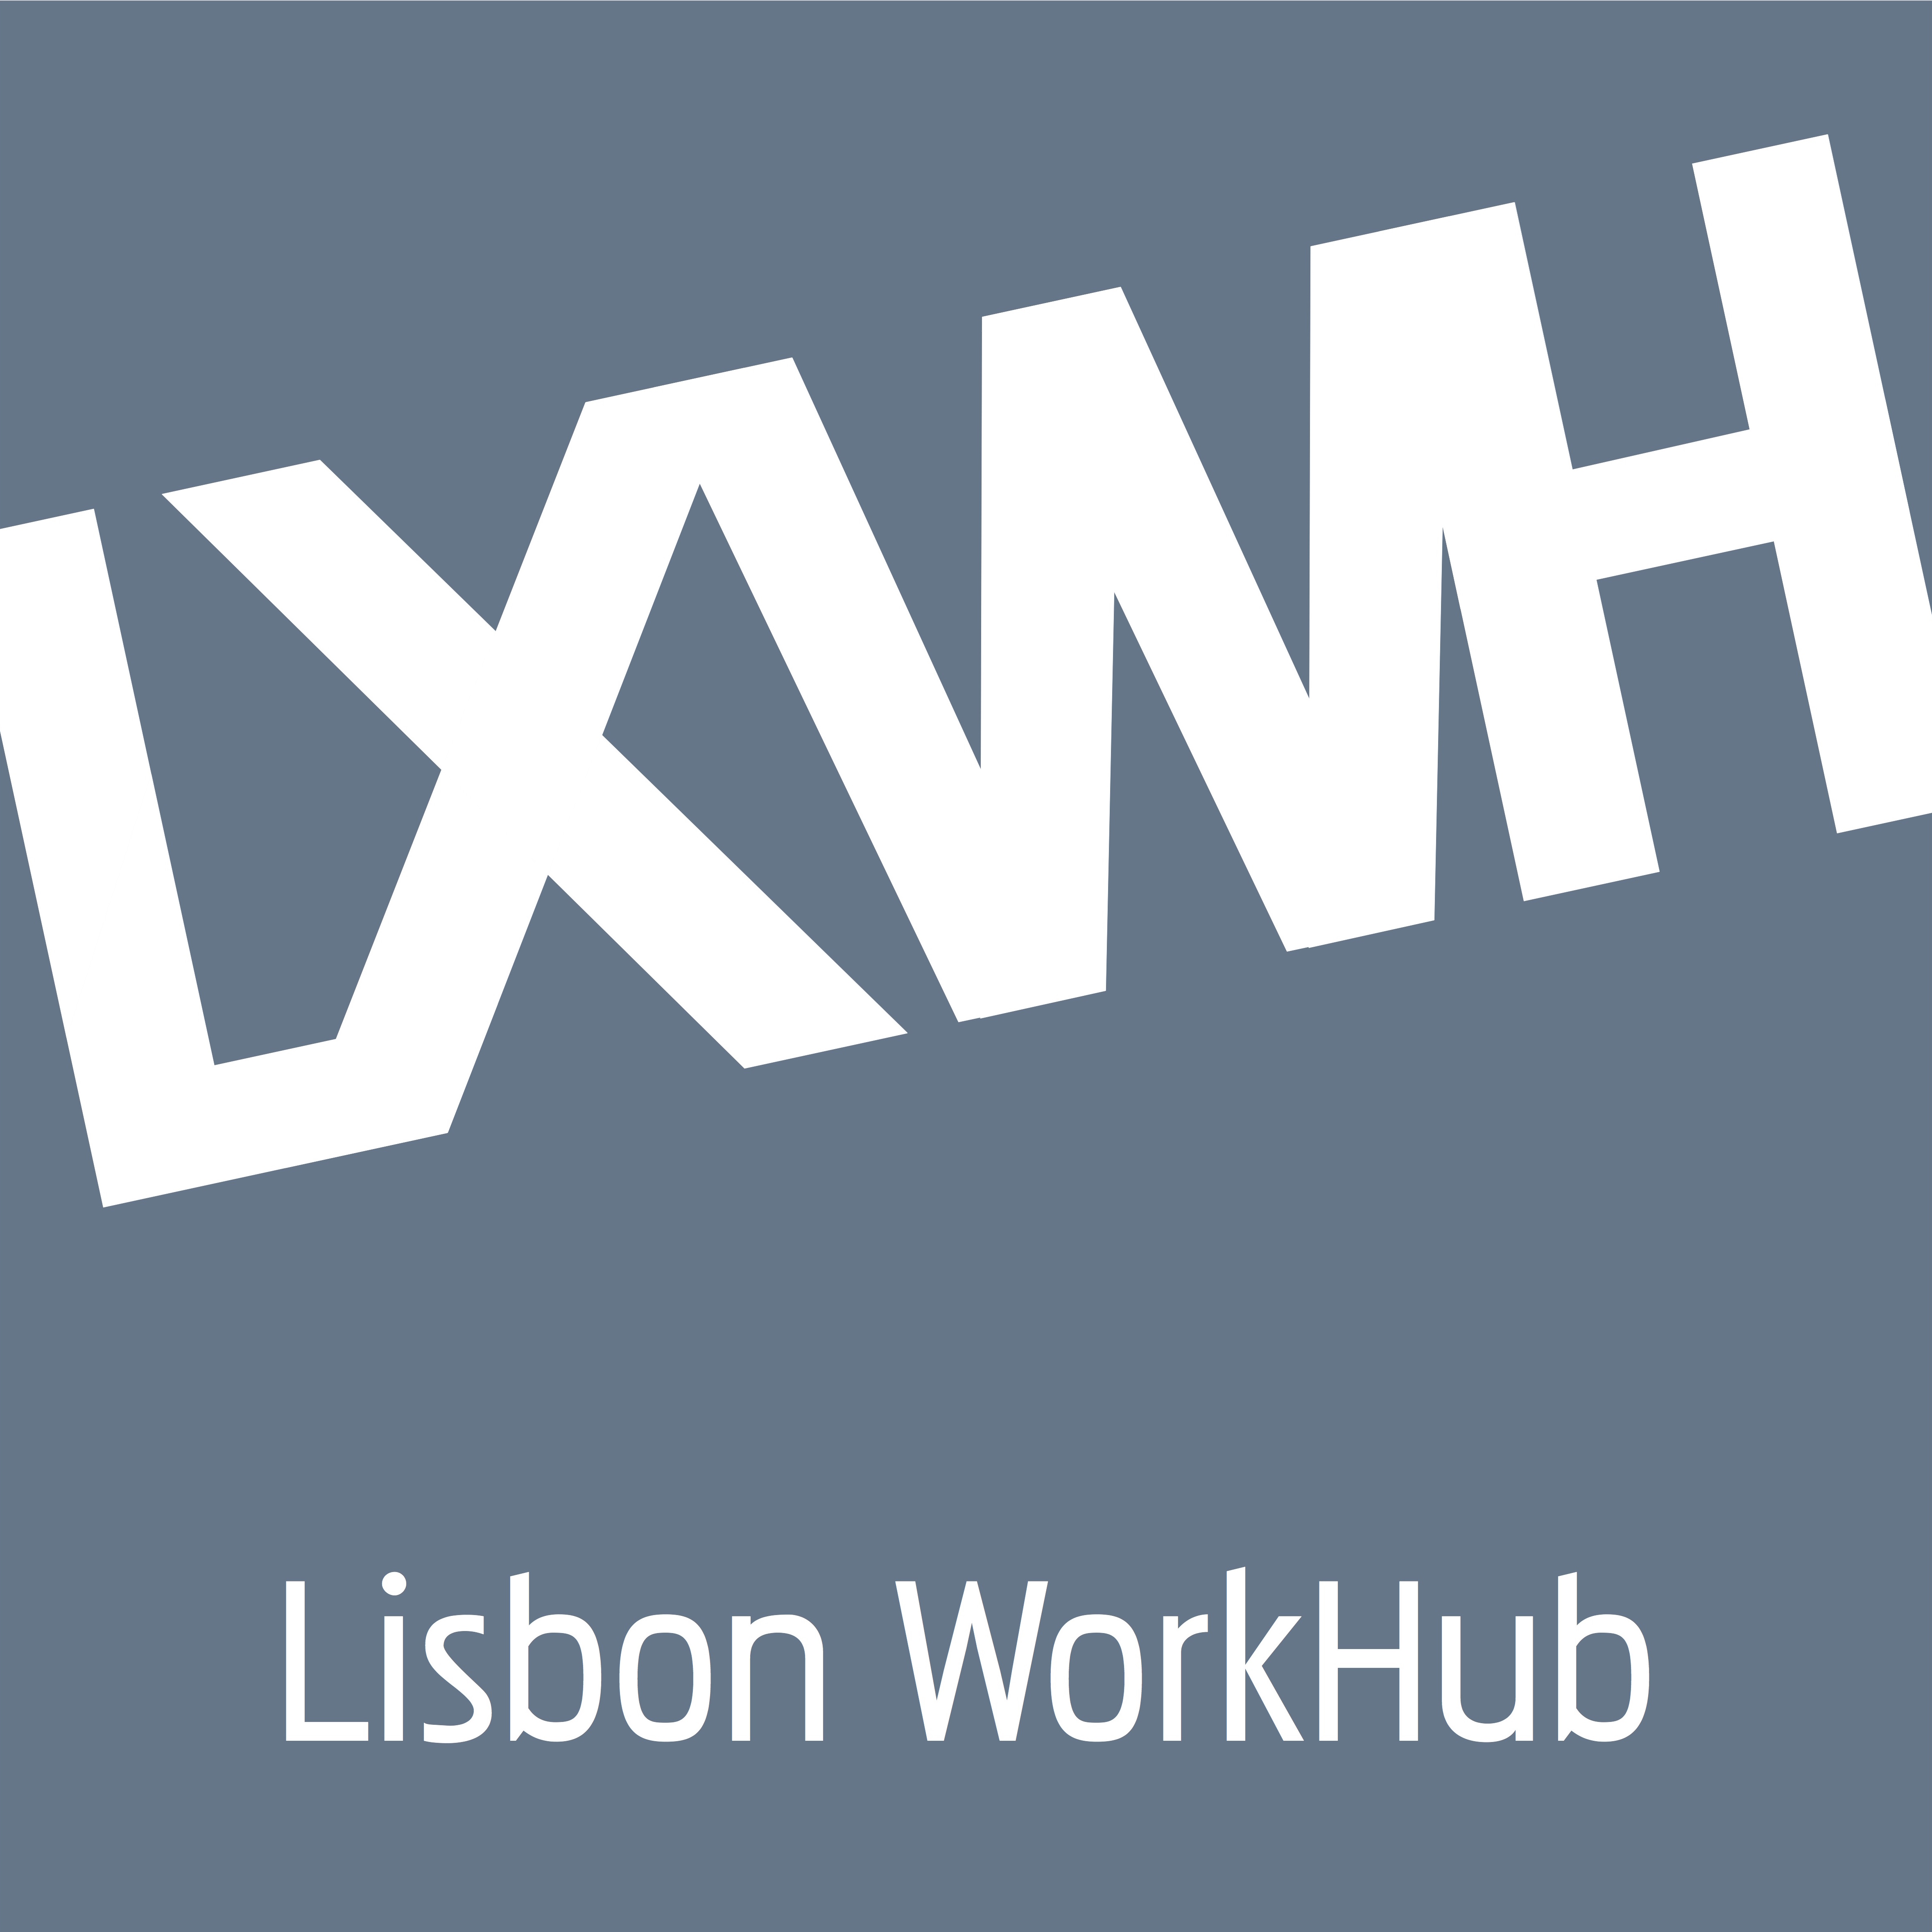 Lisbon WorkHub